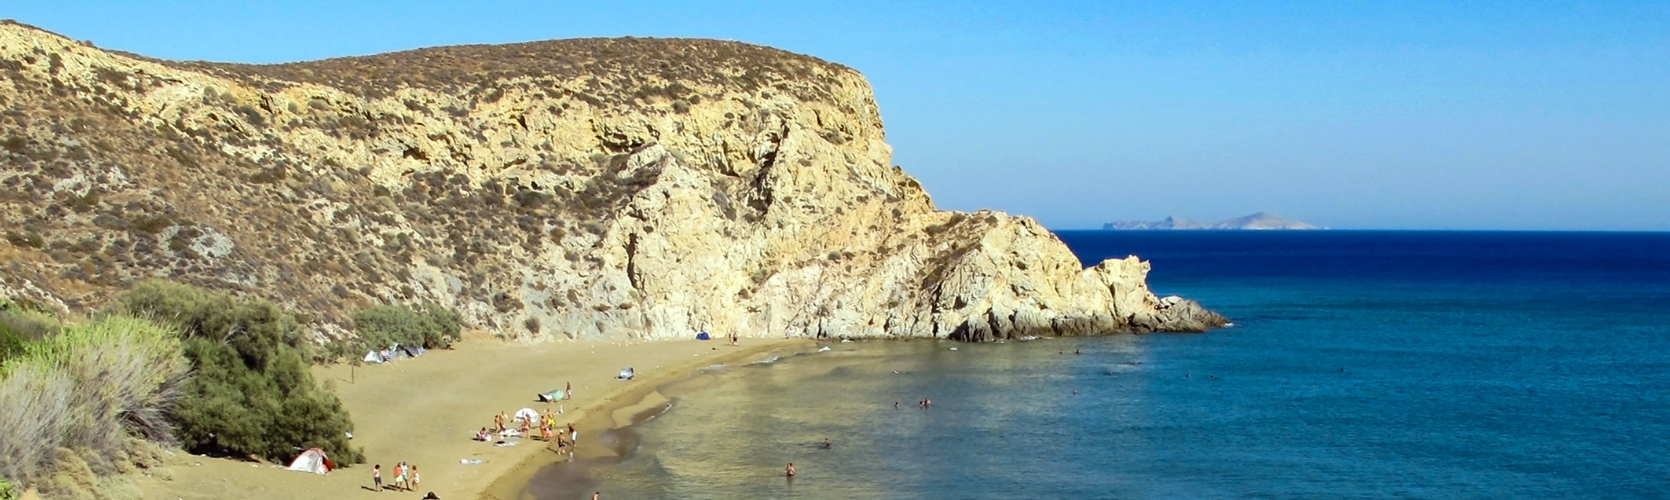 Anafi beach in the Cyclades